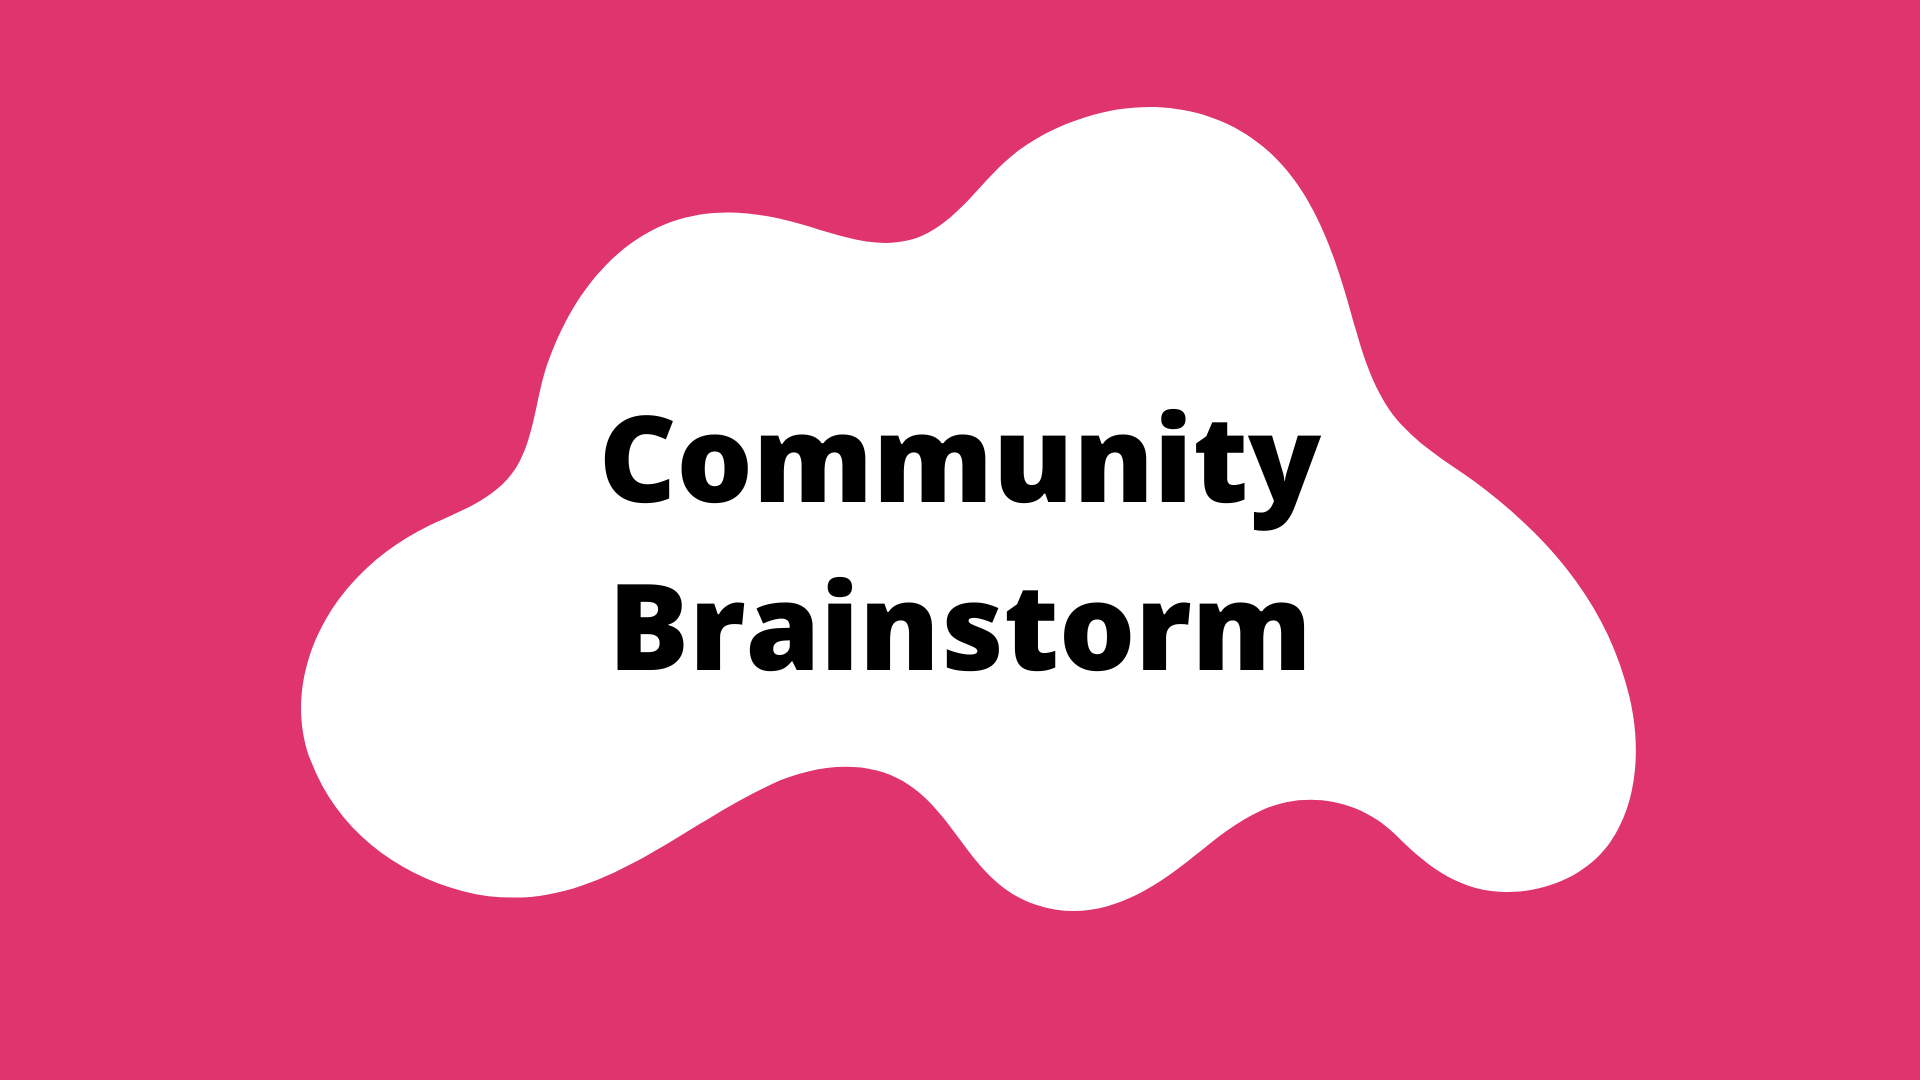 Community Brainstorm